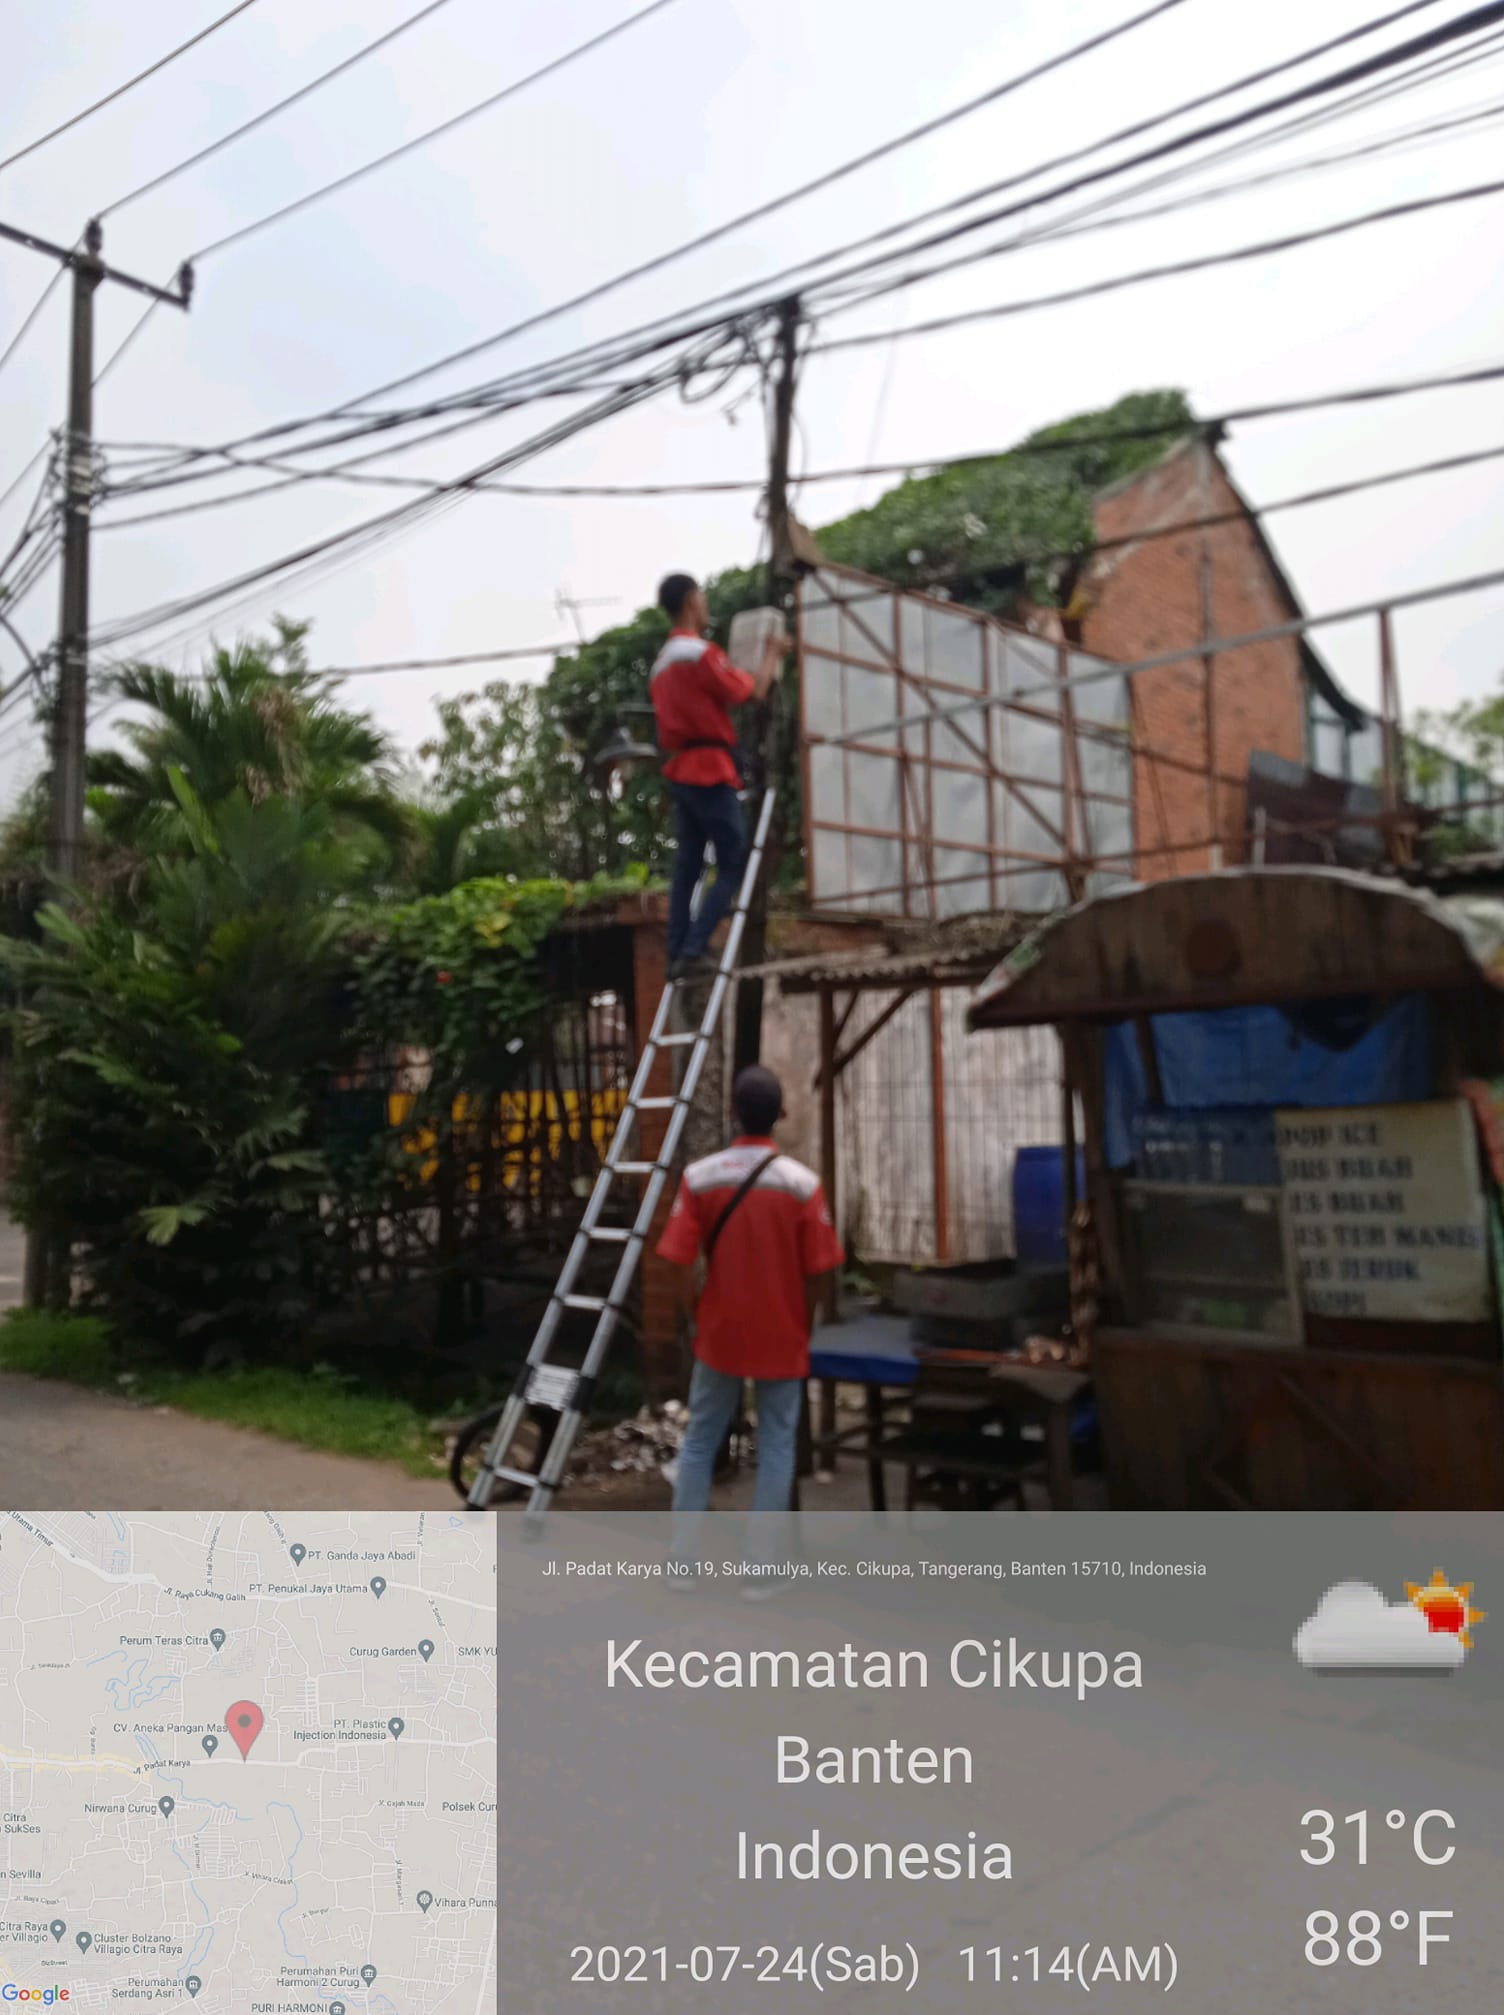 Harga Wifi Indihome Perbulan Tugurejo Tugu Semarang